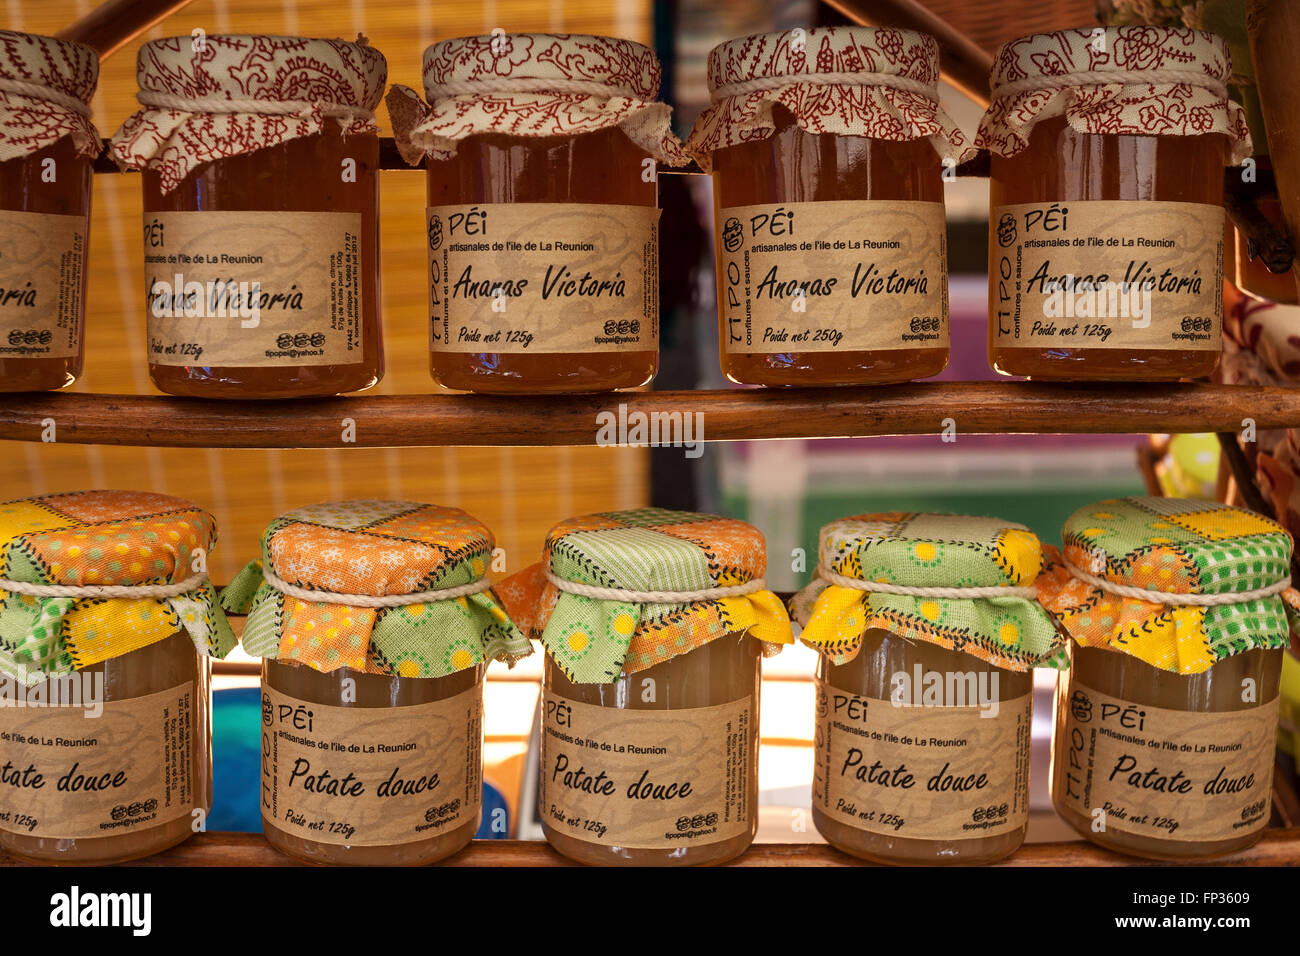 Pineapple and sweet potato jams, jars for sale, weekly market, Saint Paul, Reunion Stock Photo